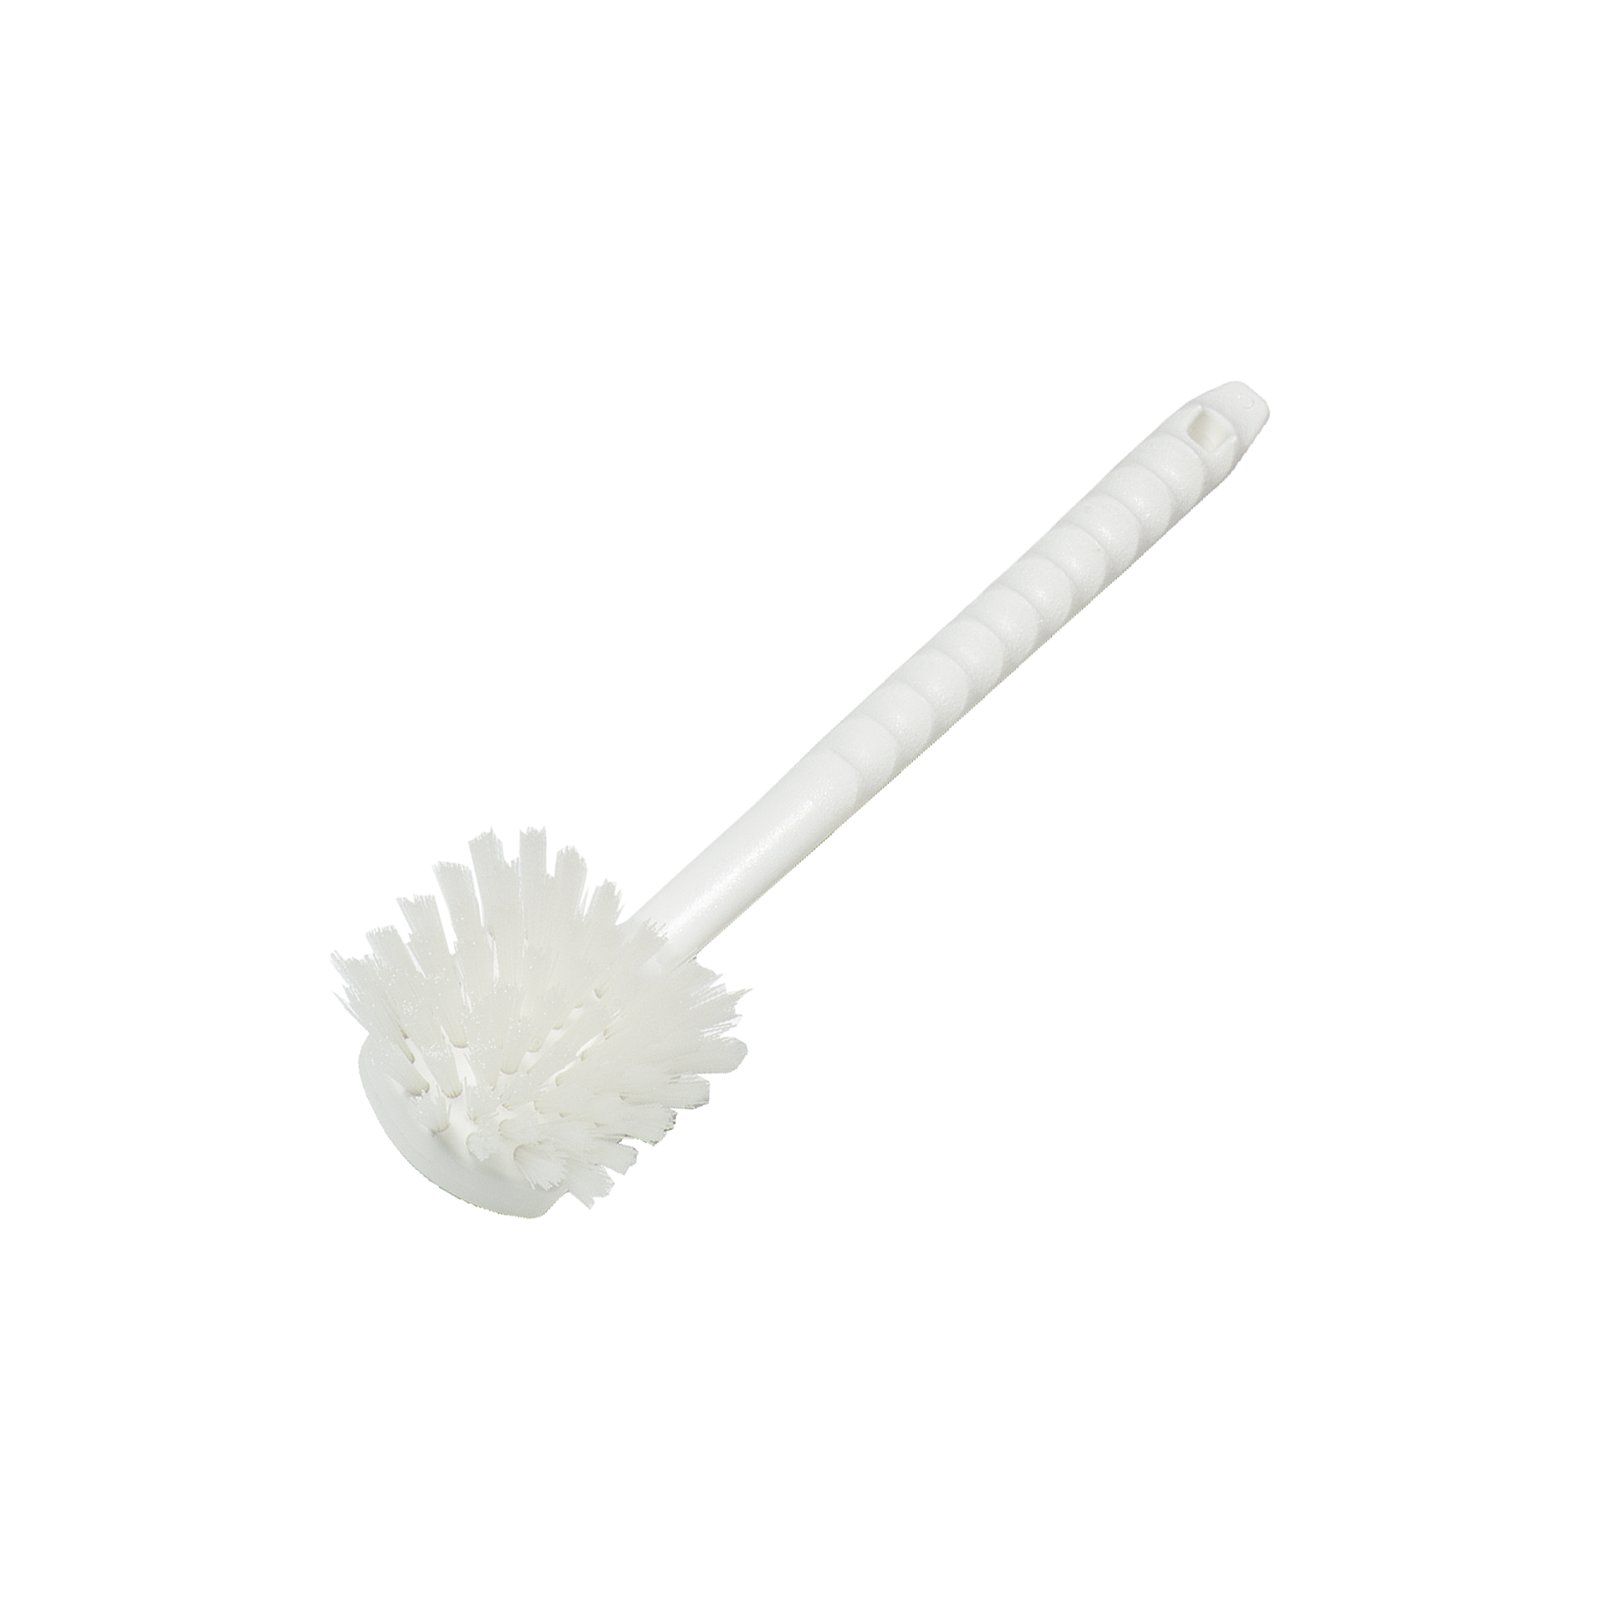 Instrument Cleaning Brushes - Nylon - AB201